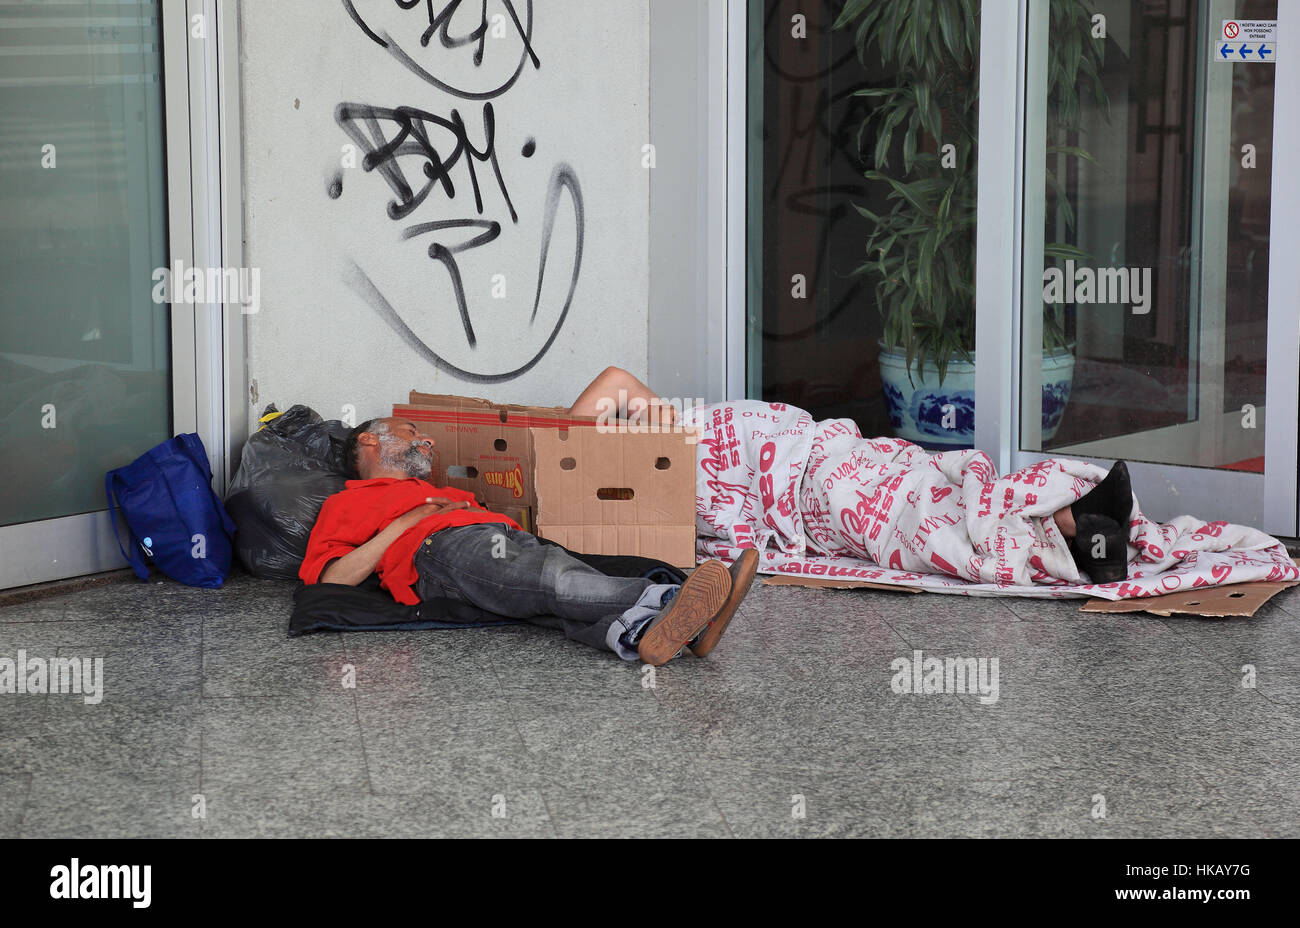 Italy, city Milan, bum, homeless sleeping on the floor Stock Photo